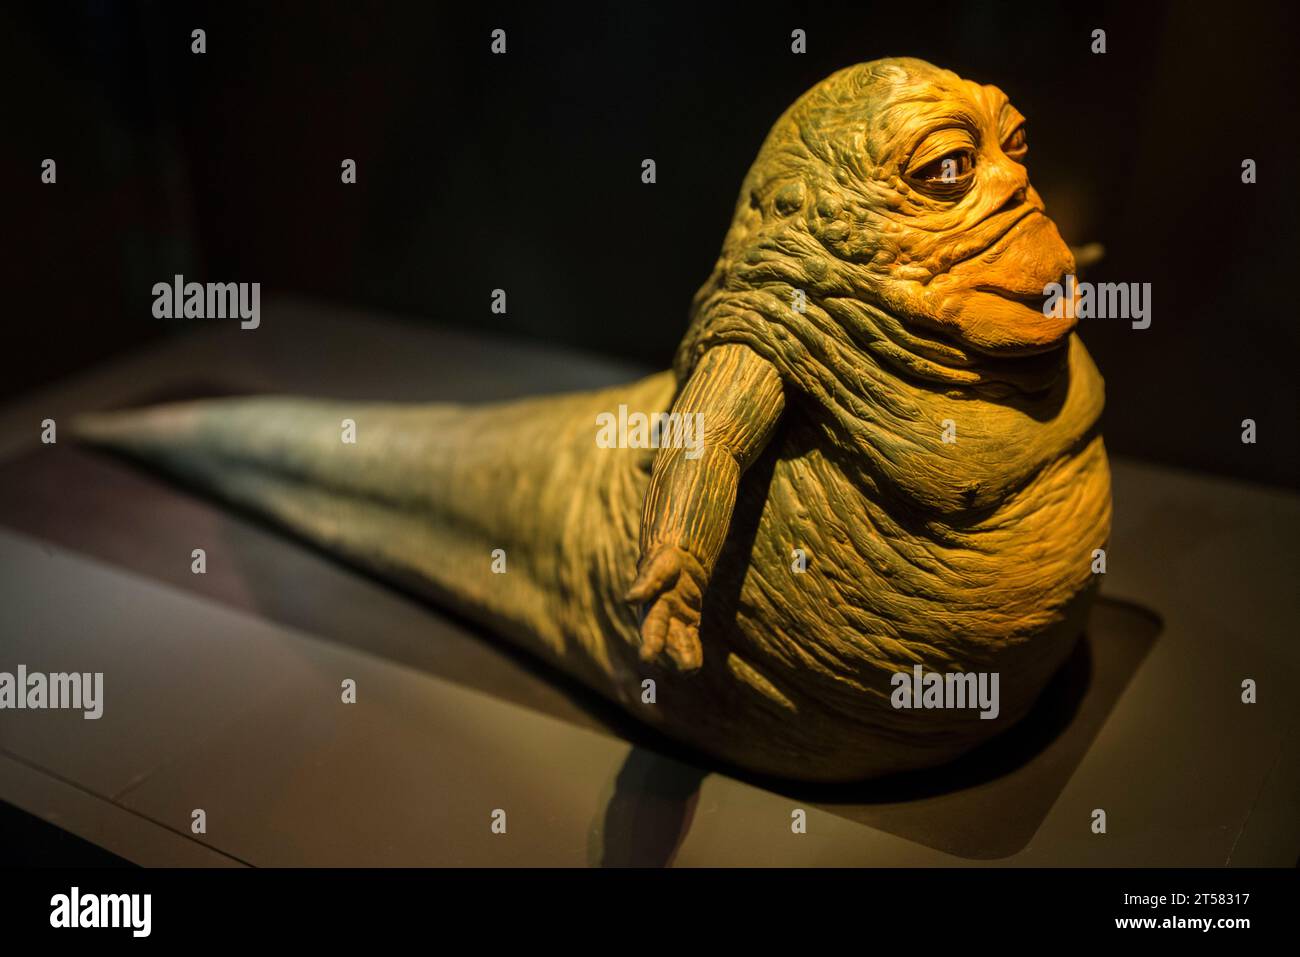 Original Jabba model used in Star Wars - The Phantom Menace Stock Photo